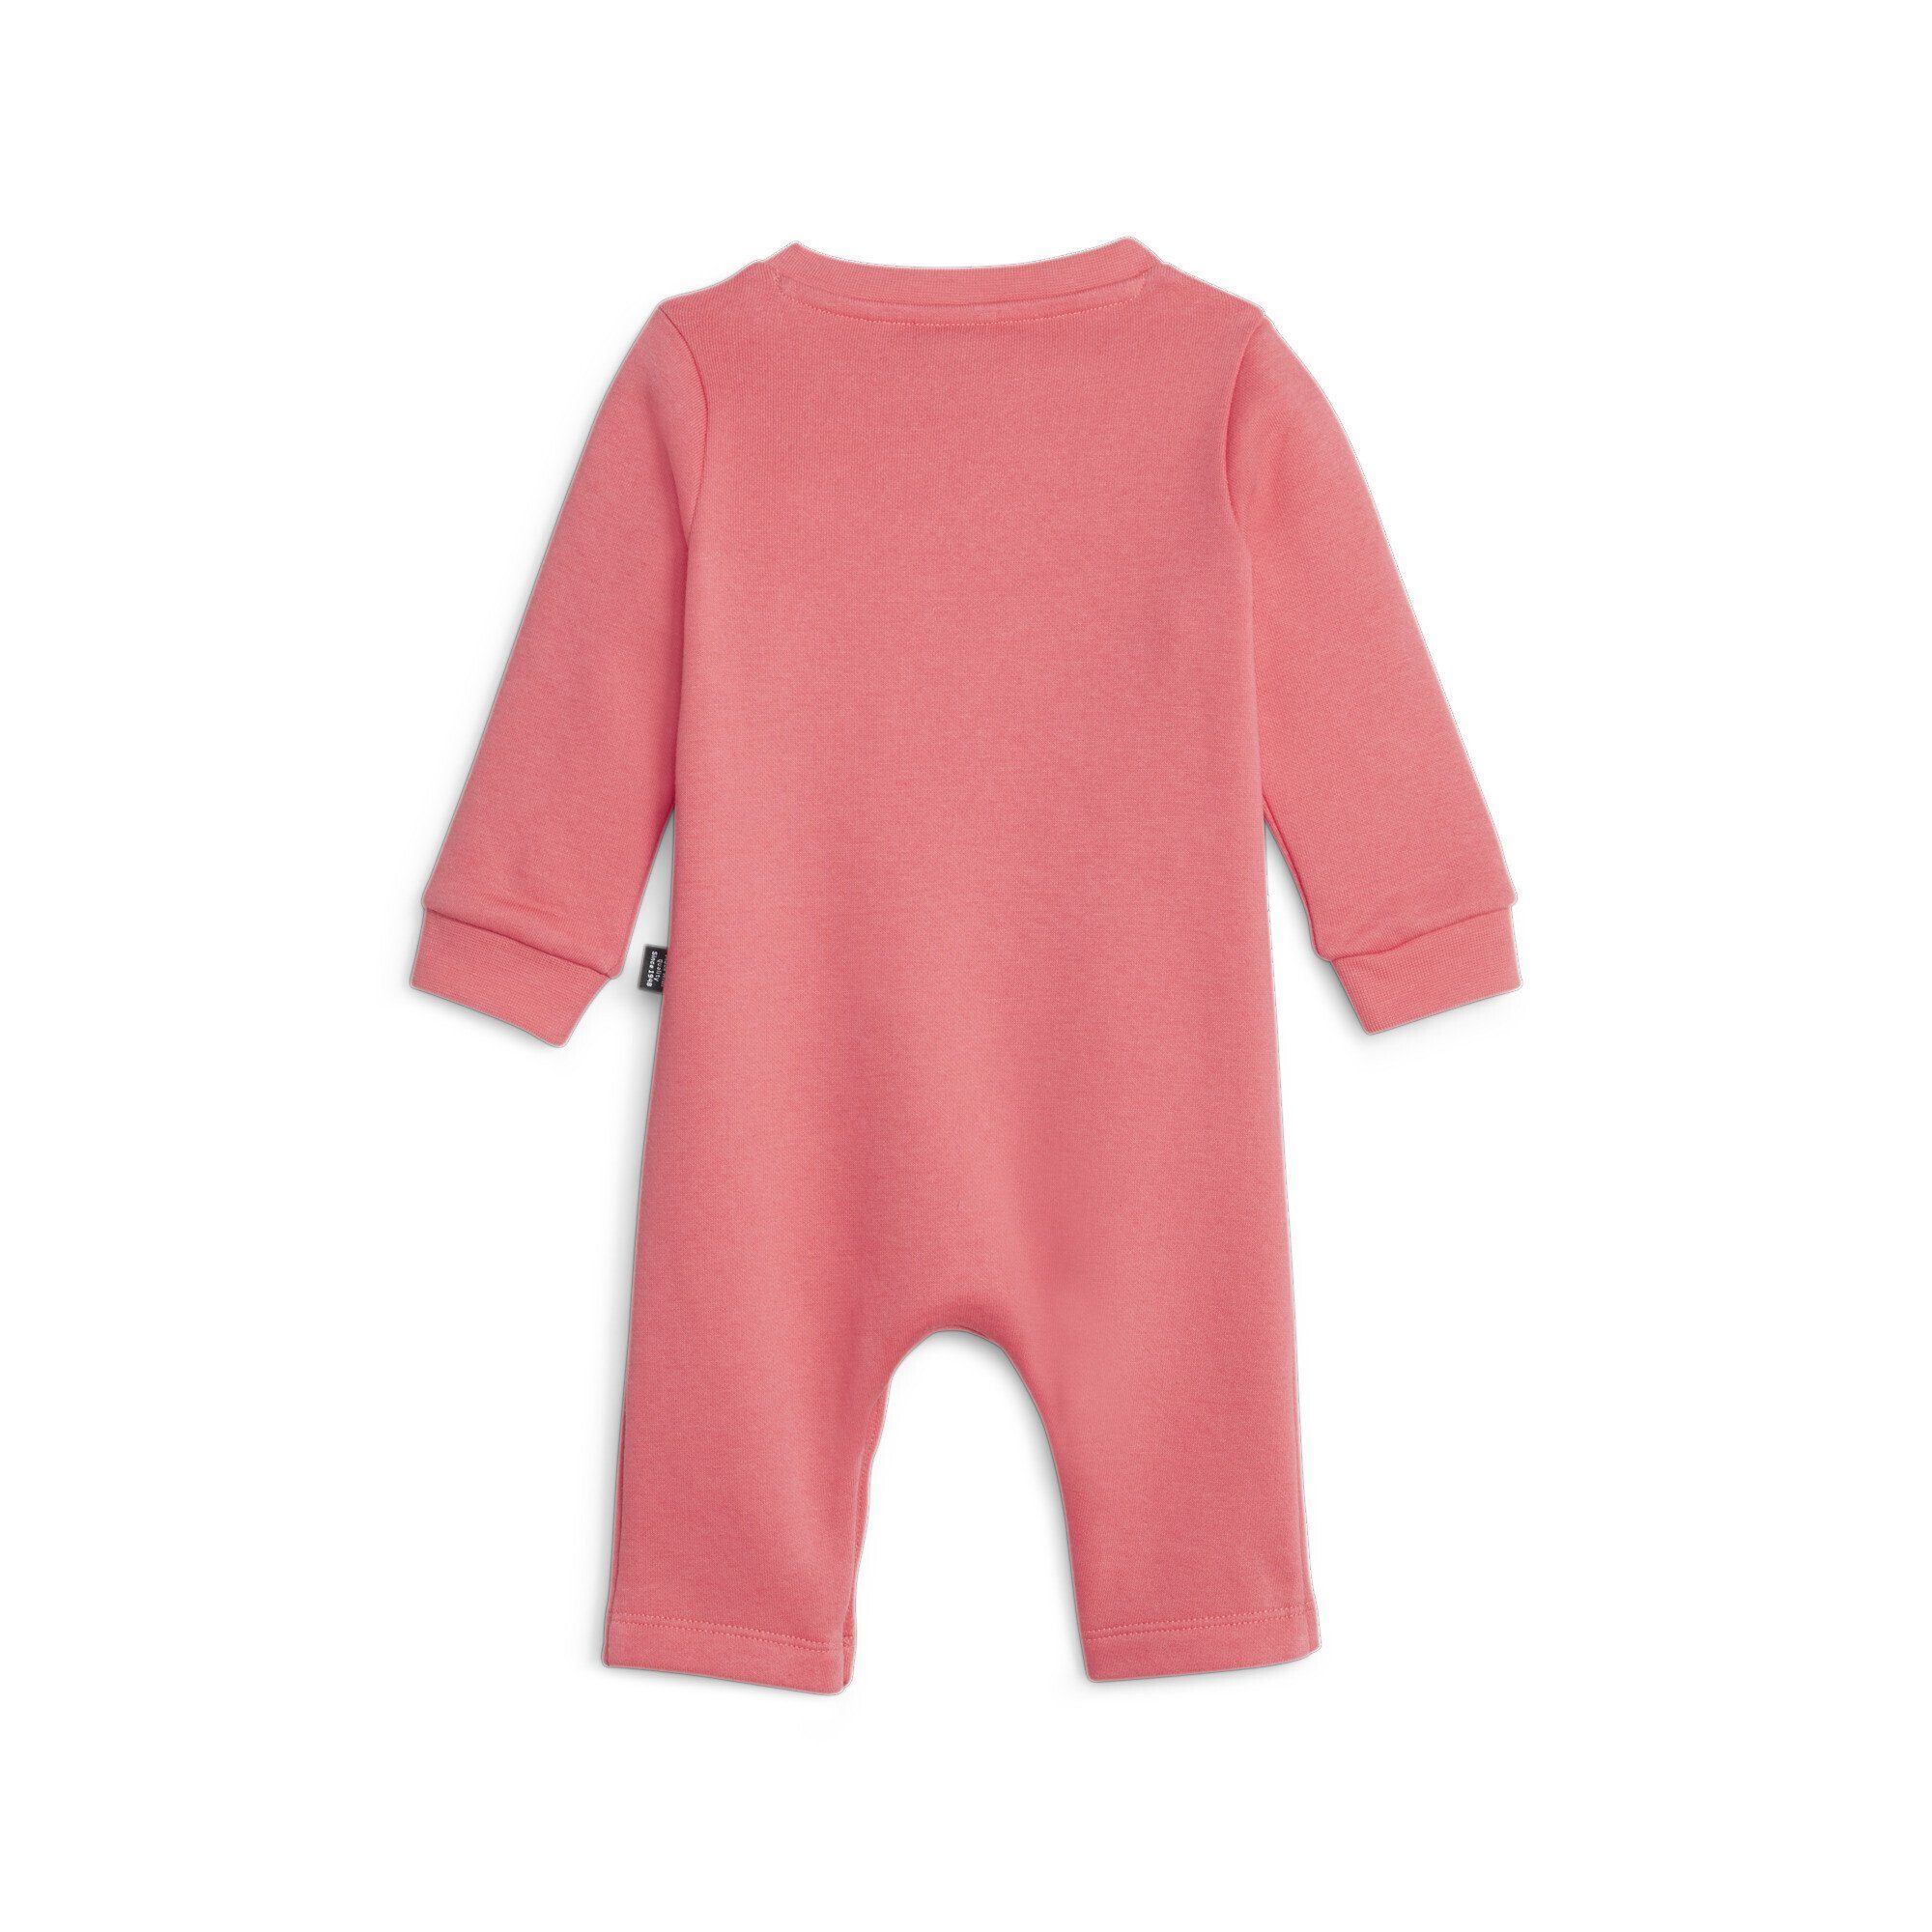 Minicats Kinder Pink Electric Overall Newborn PUMA Blush Coverall